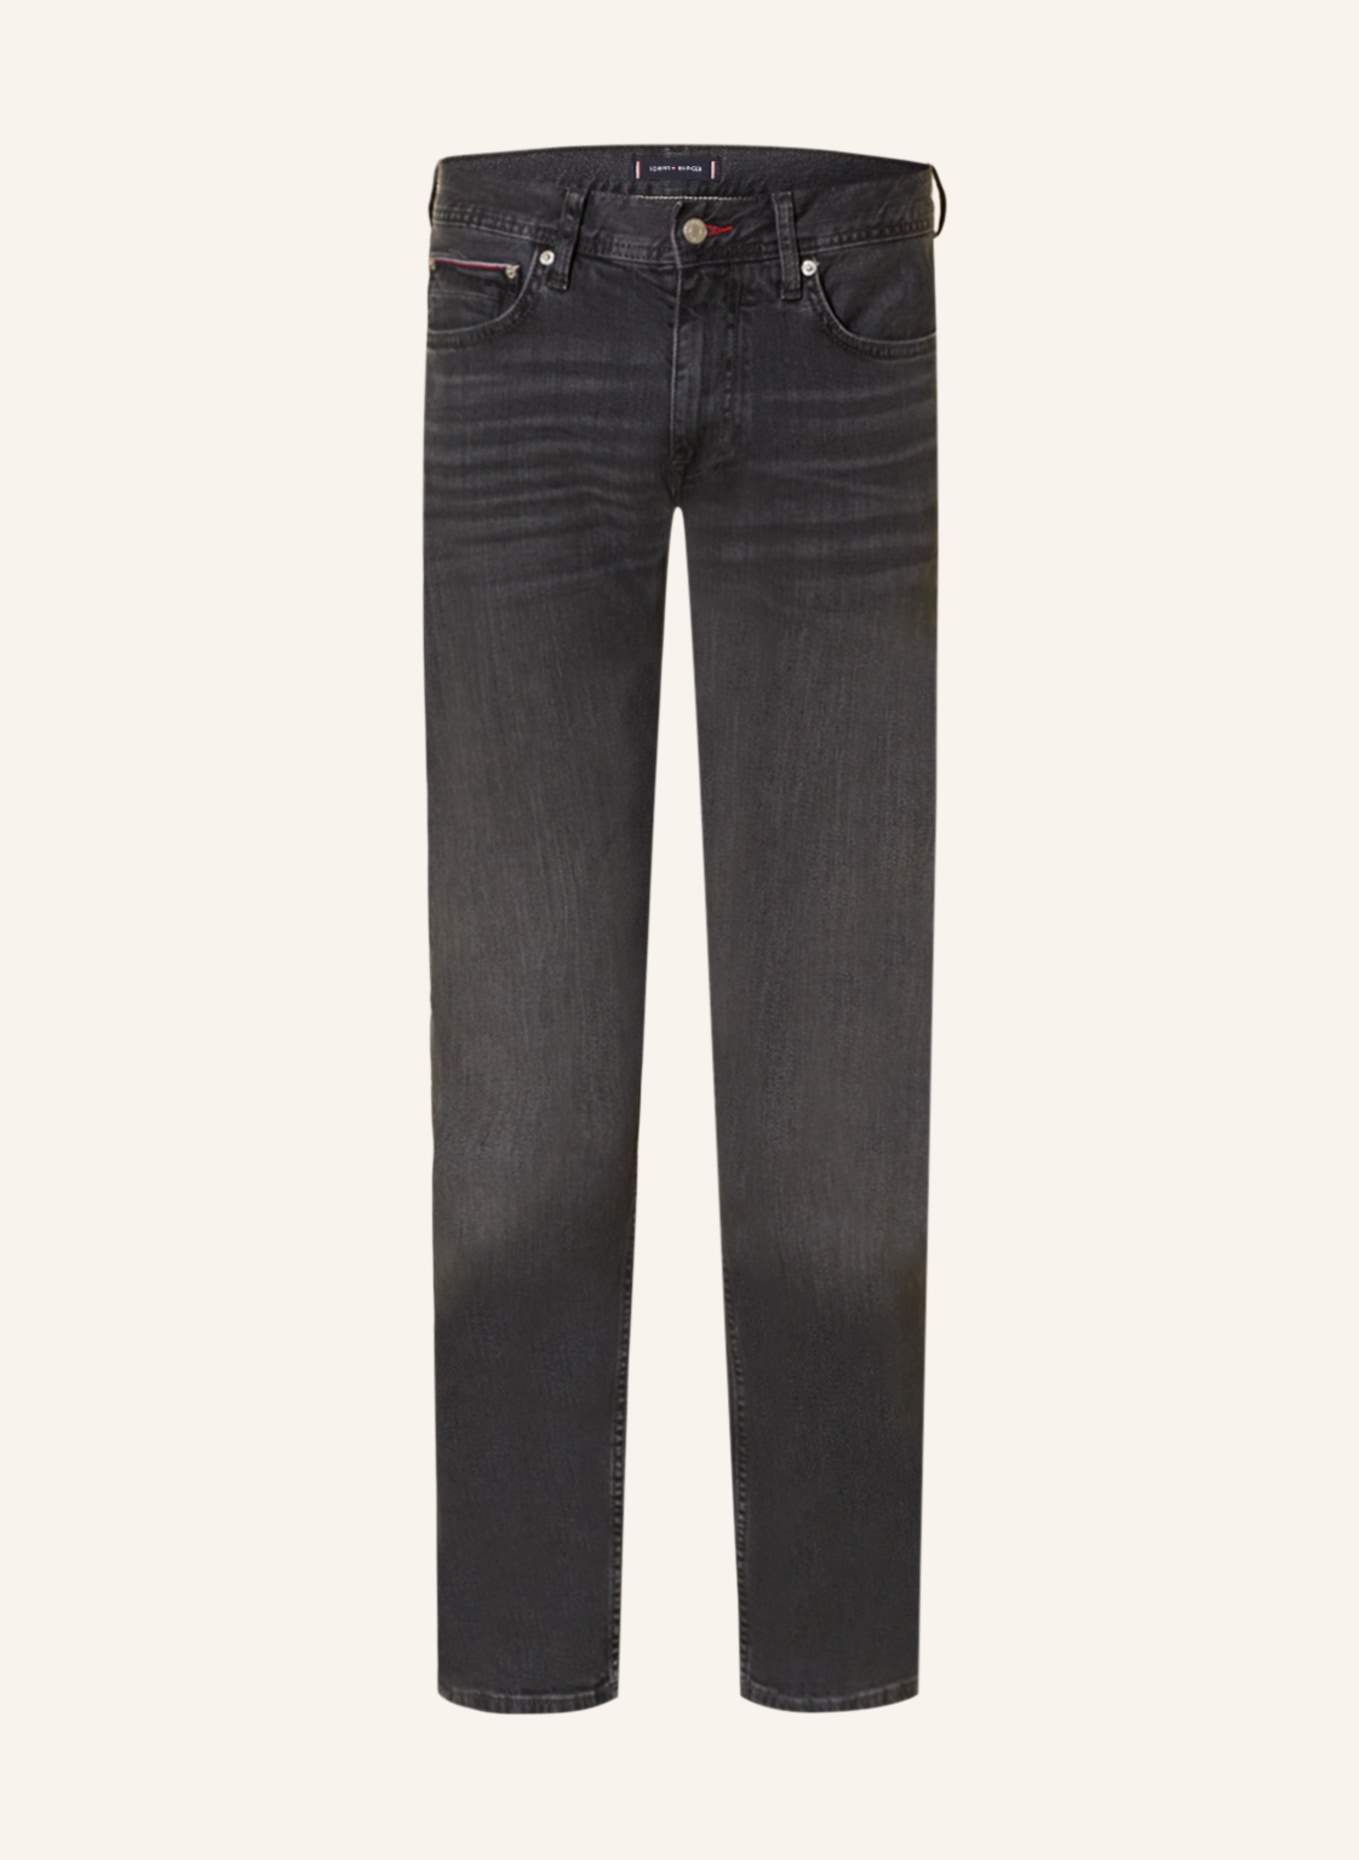 TOMMY HILFIGER Jeans DENTON Straight Fit, Farbe: 1B1 Salton Black (Bild 1)